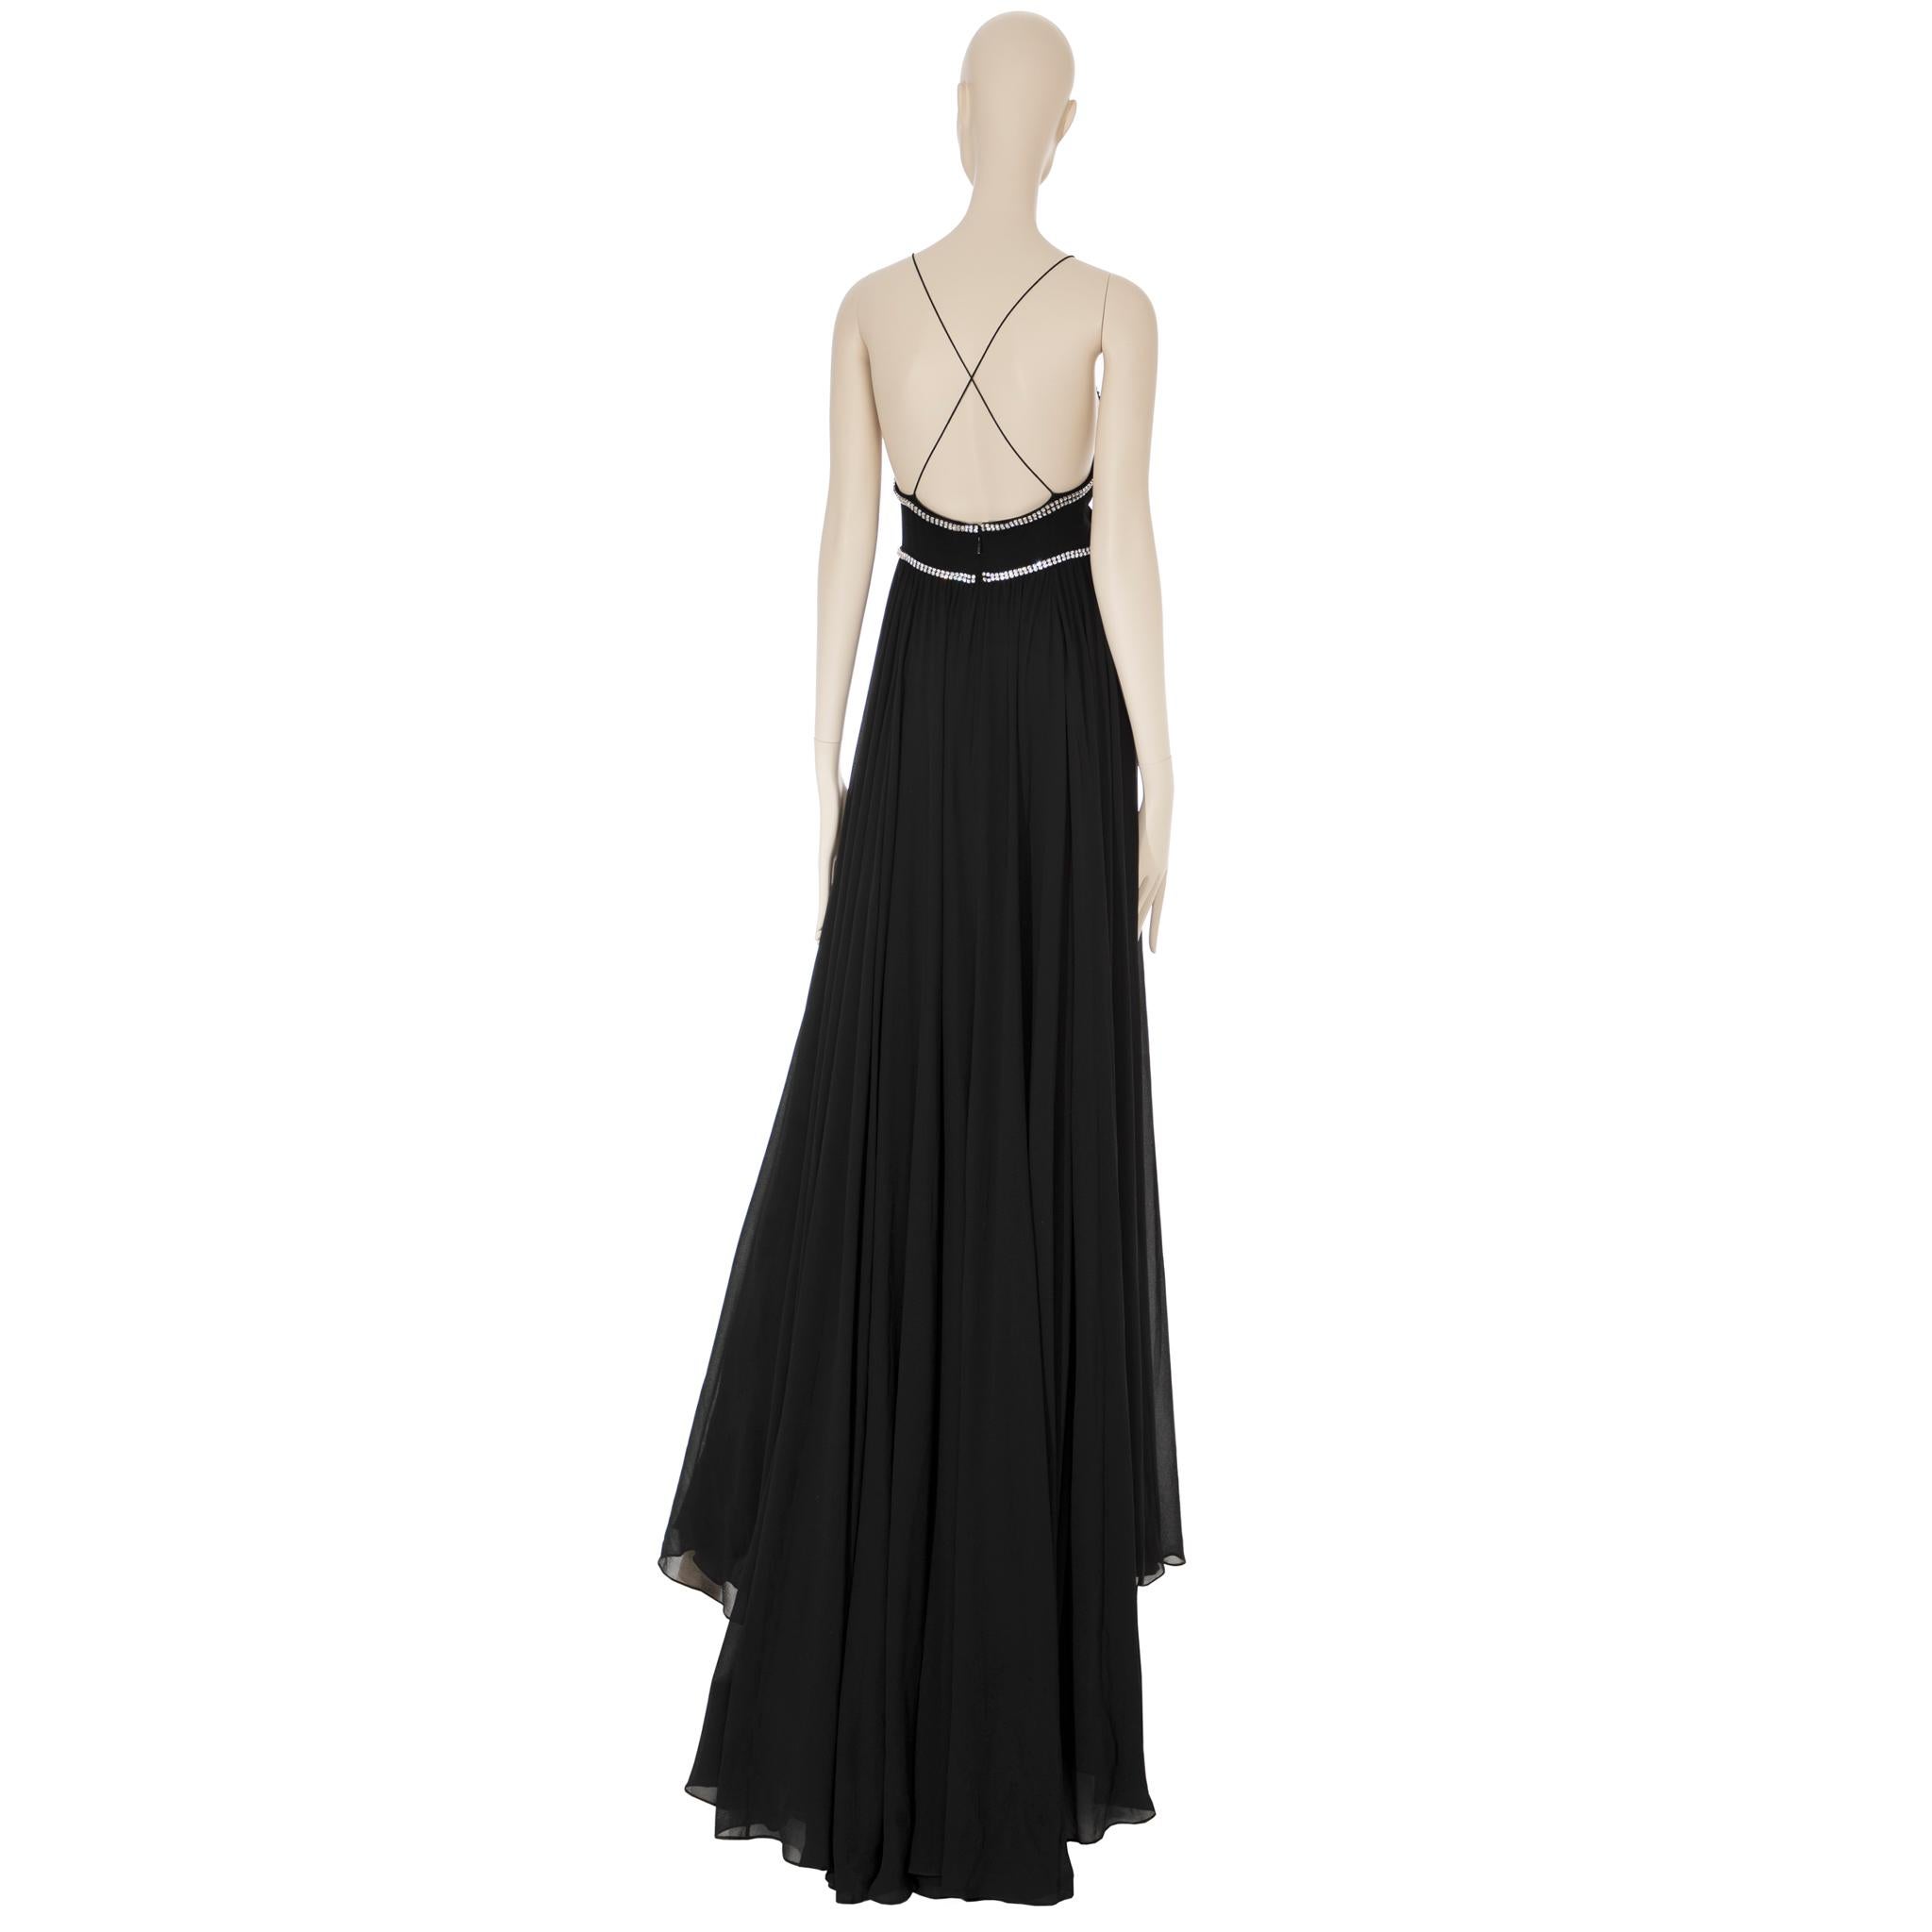 Saint Laurent Black Evening Gown With Crystal Details 38 FR For Sale 3